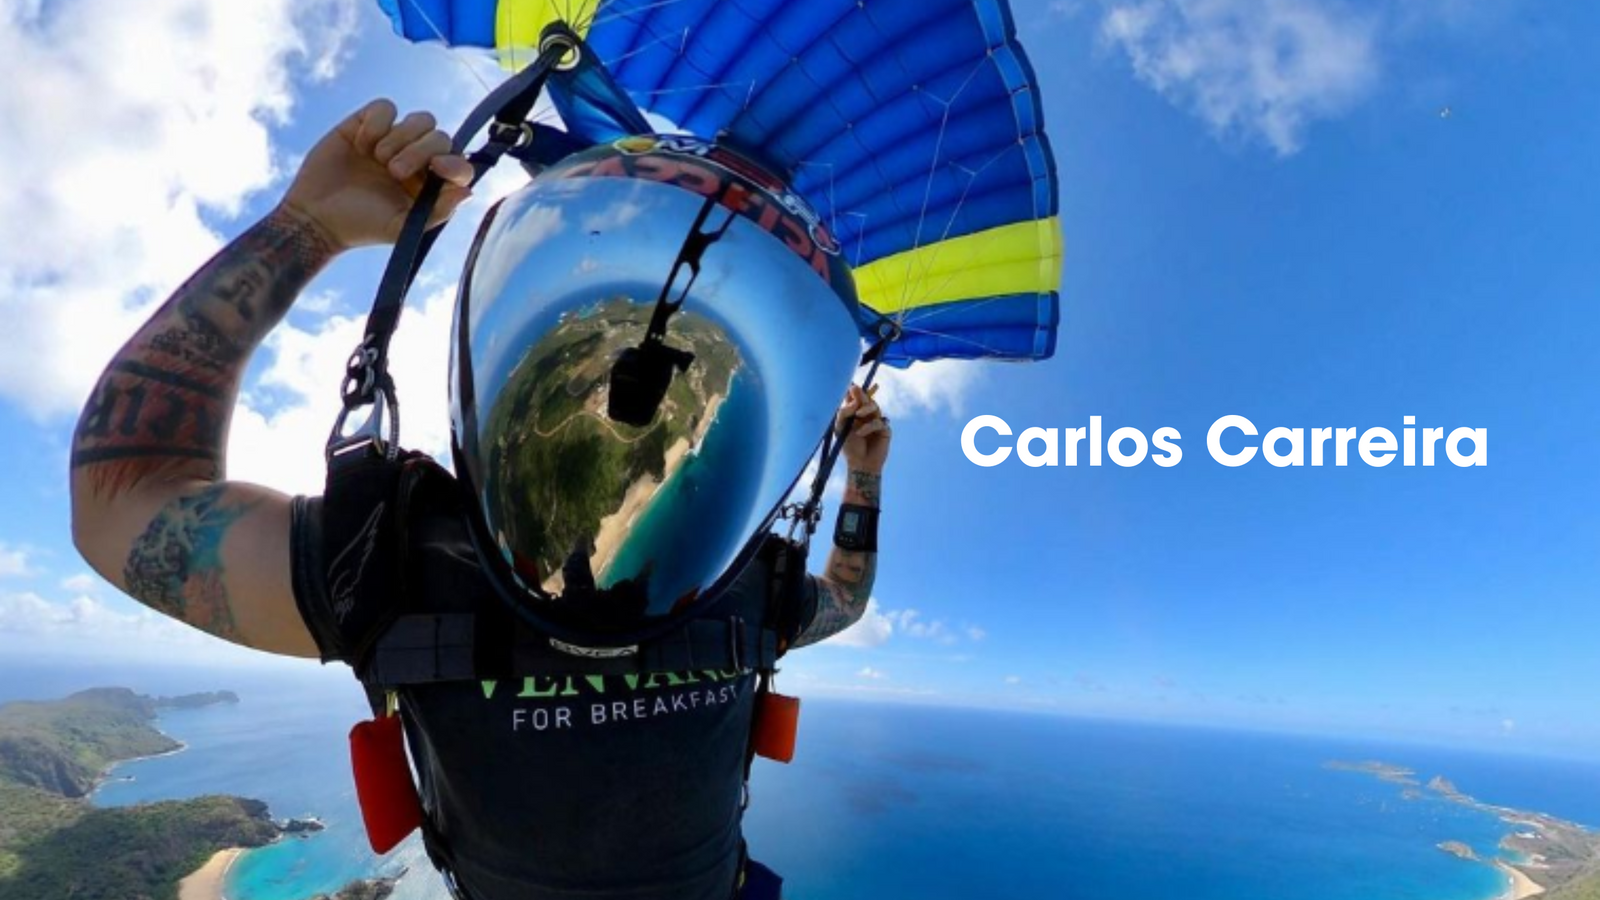 Get to know Carlos